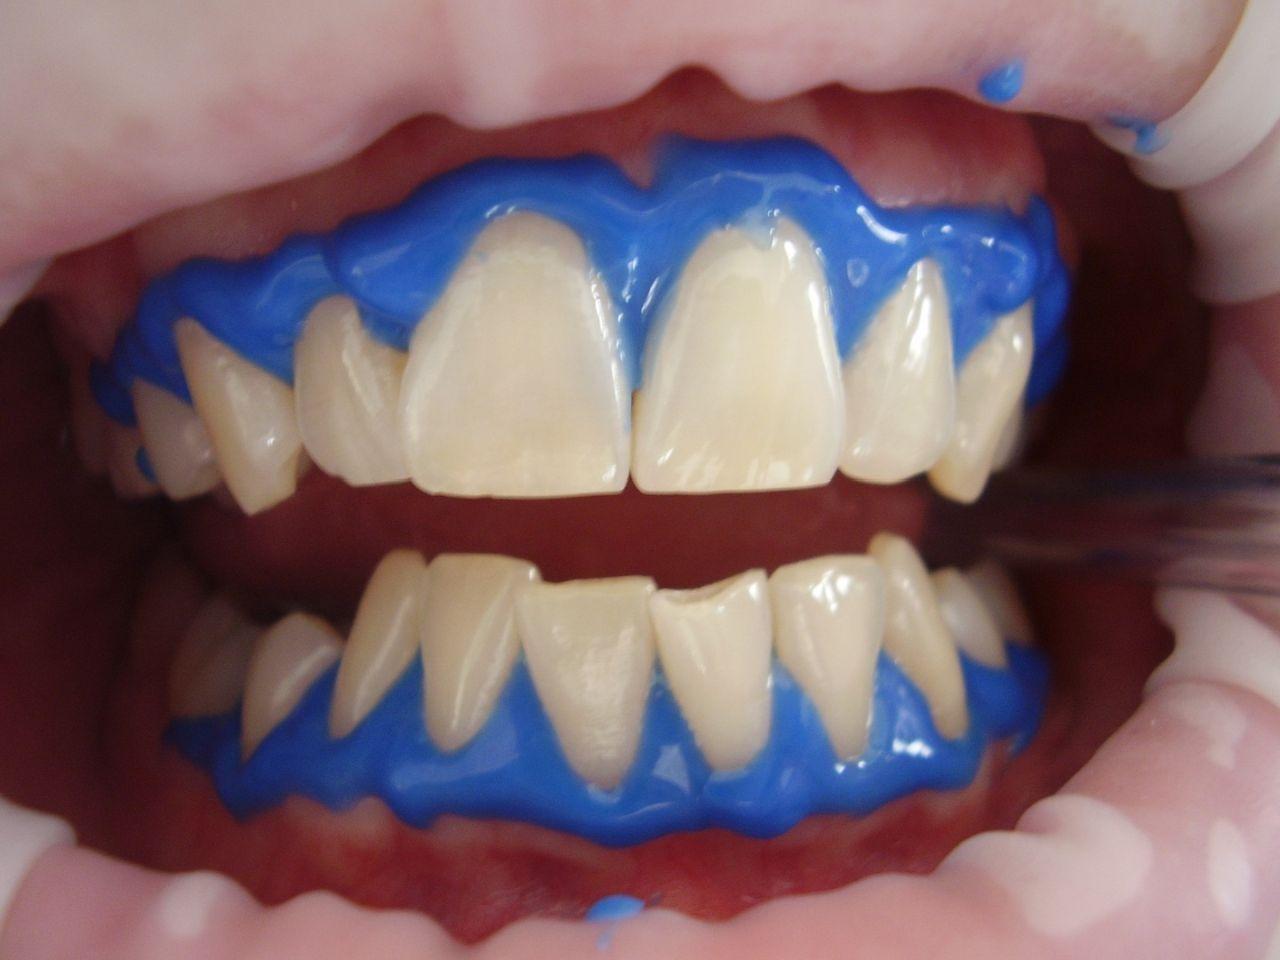 Dental Smile Image Full HD or Free Download